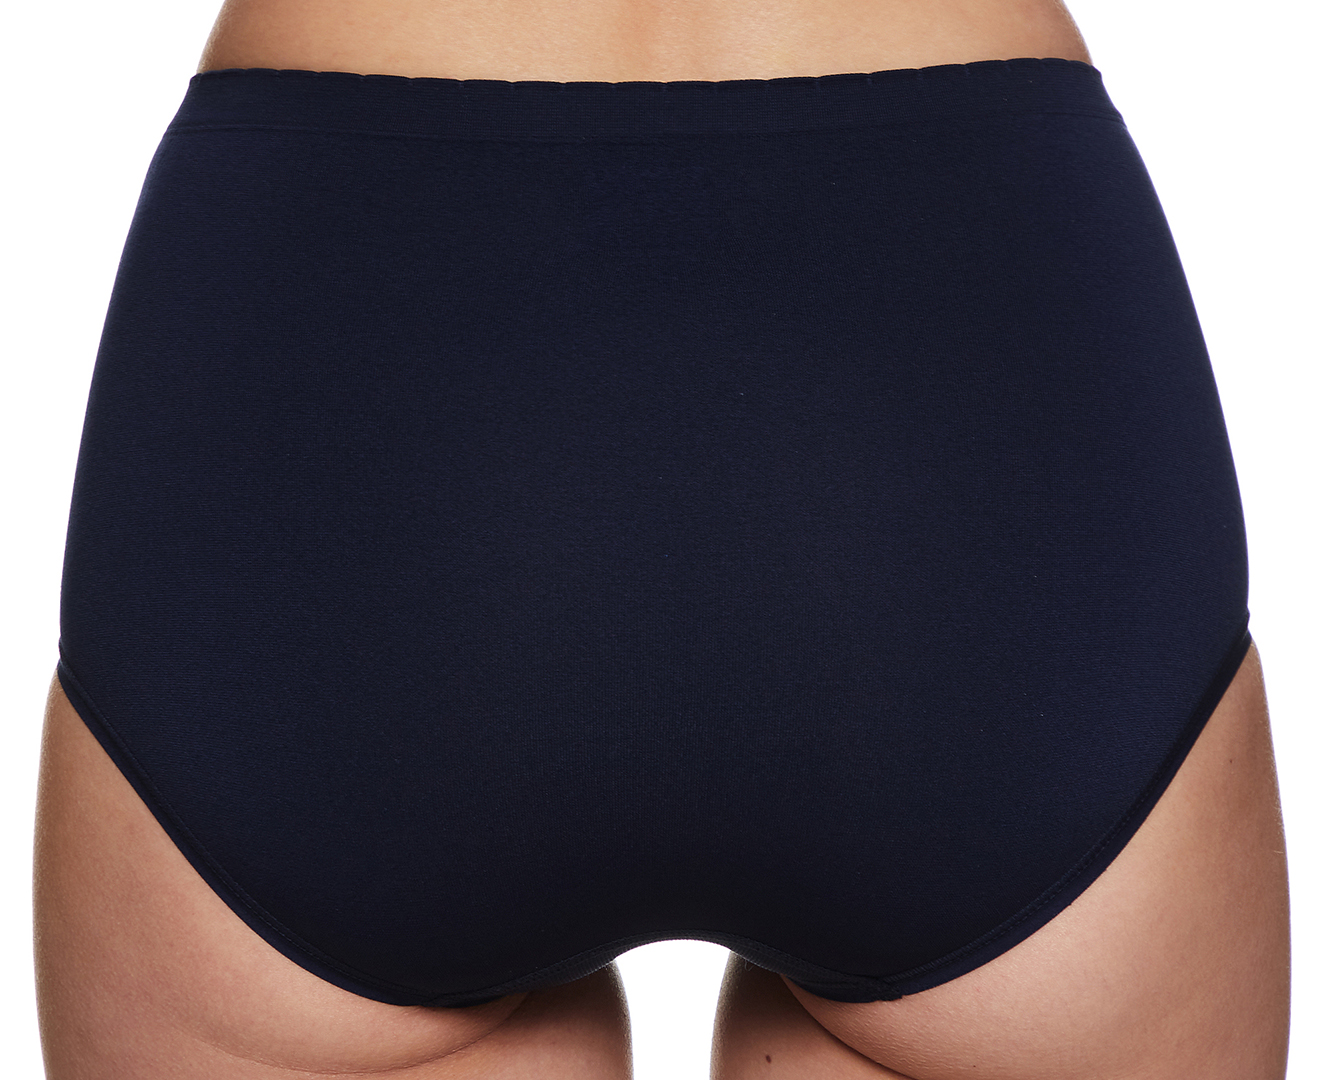 Jockey Women's Everyday Full Brief Underwear - Navy